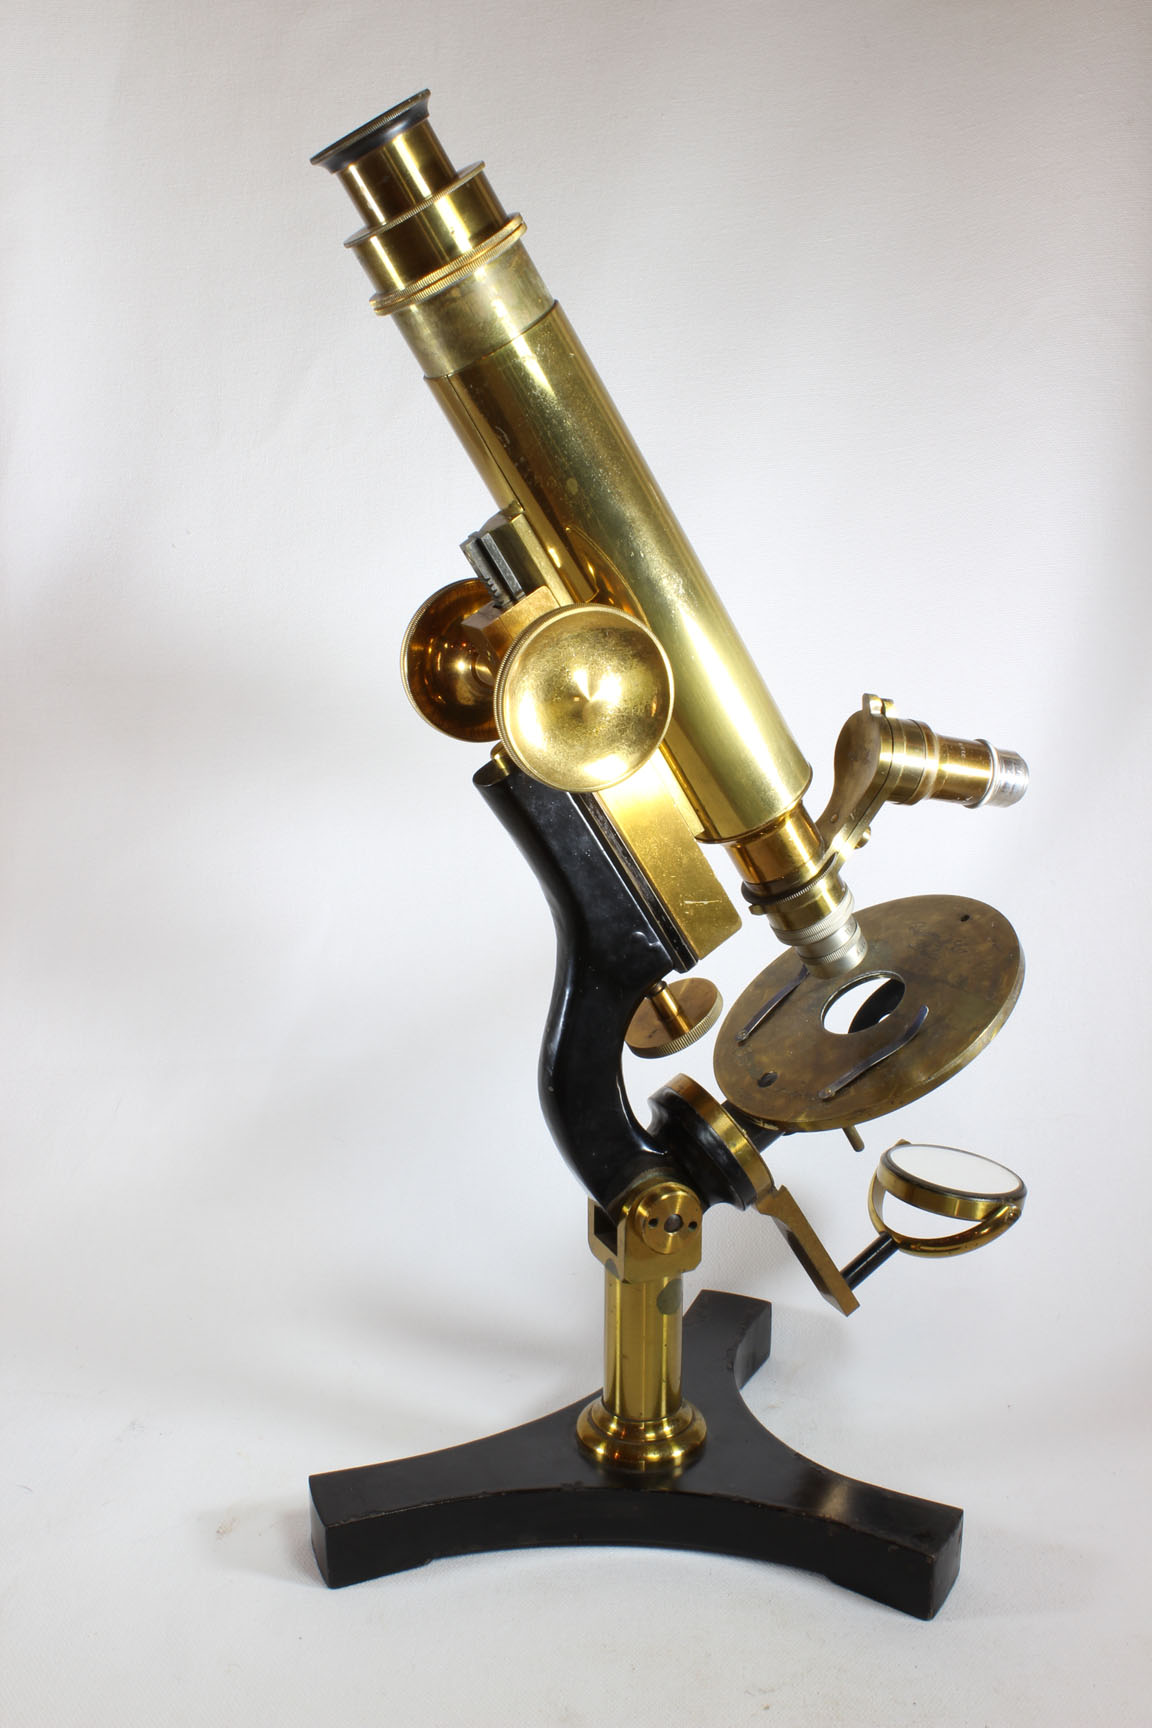 Acme #4 Microscope